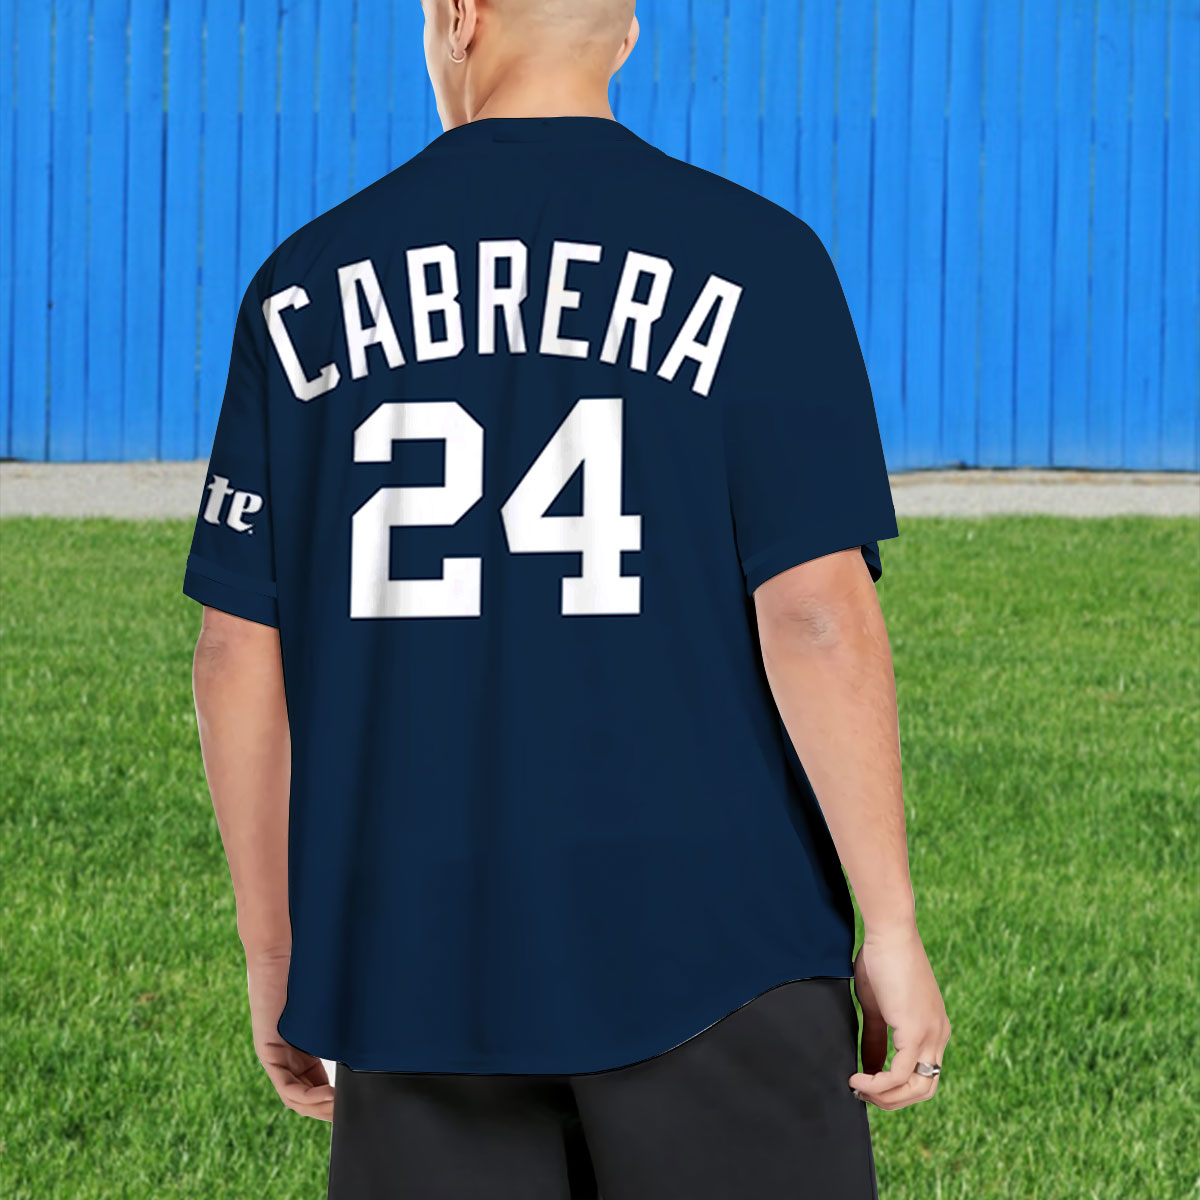 Miguel Cabrera Detroit Tigers Baseball Jersey Giveaway 